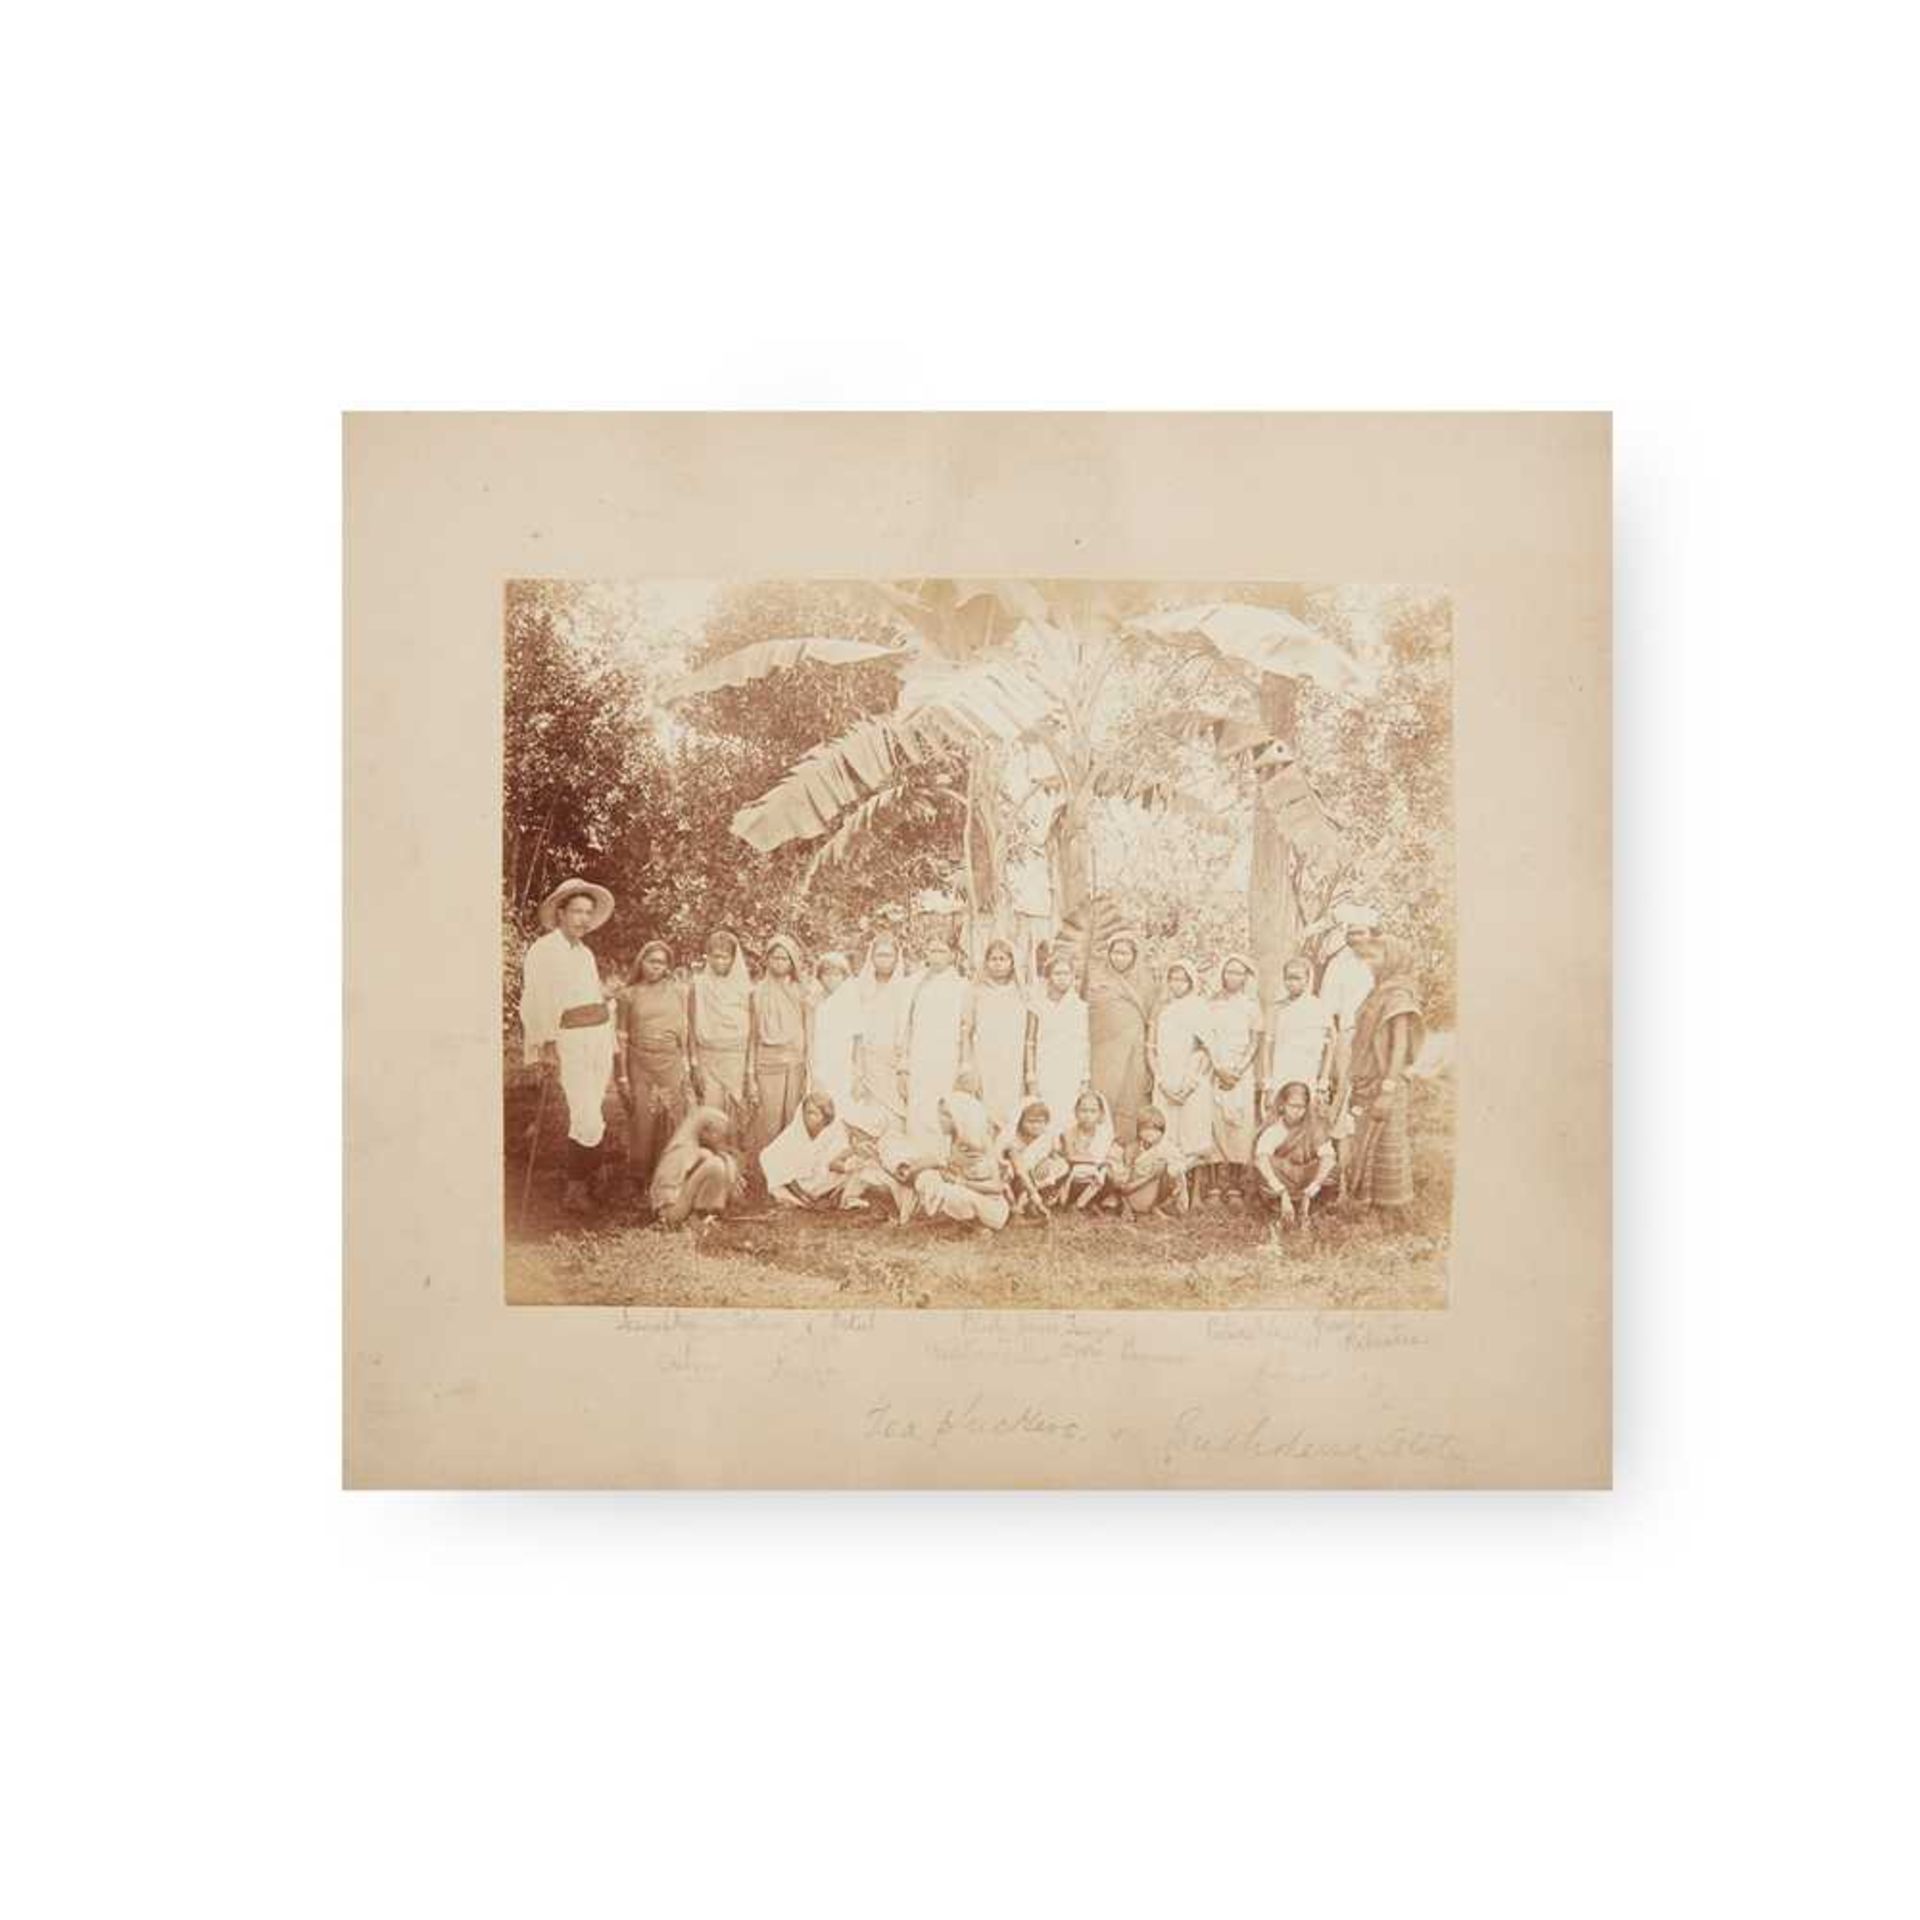 Ceylon [Sri Lanka] 19th century album of sketches and photographs 31 sketches of various sizes,